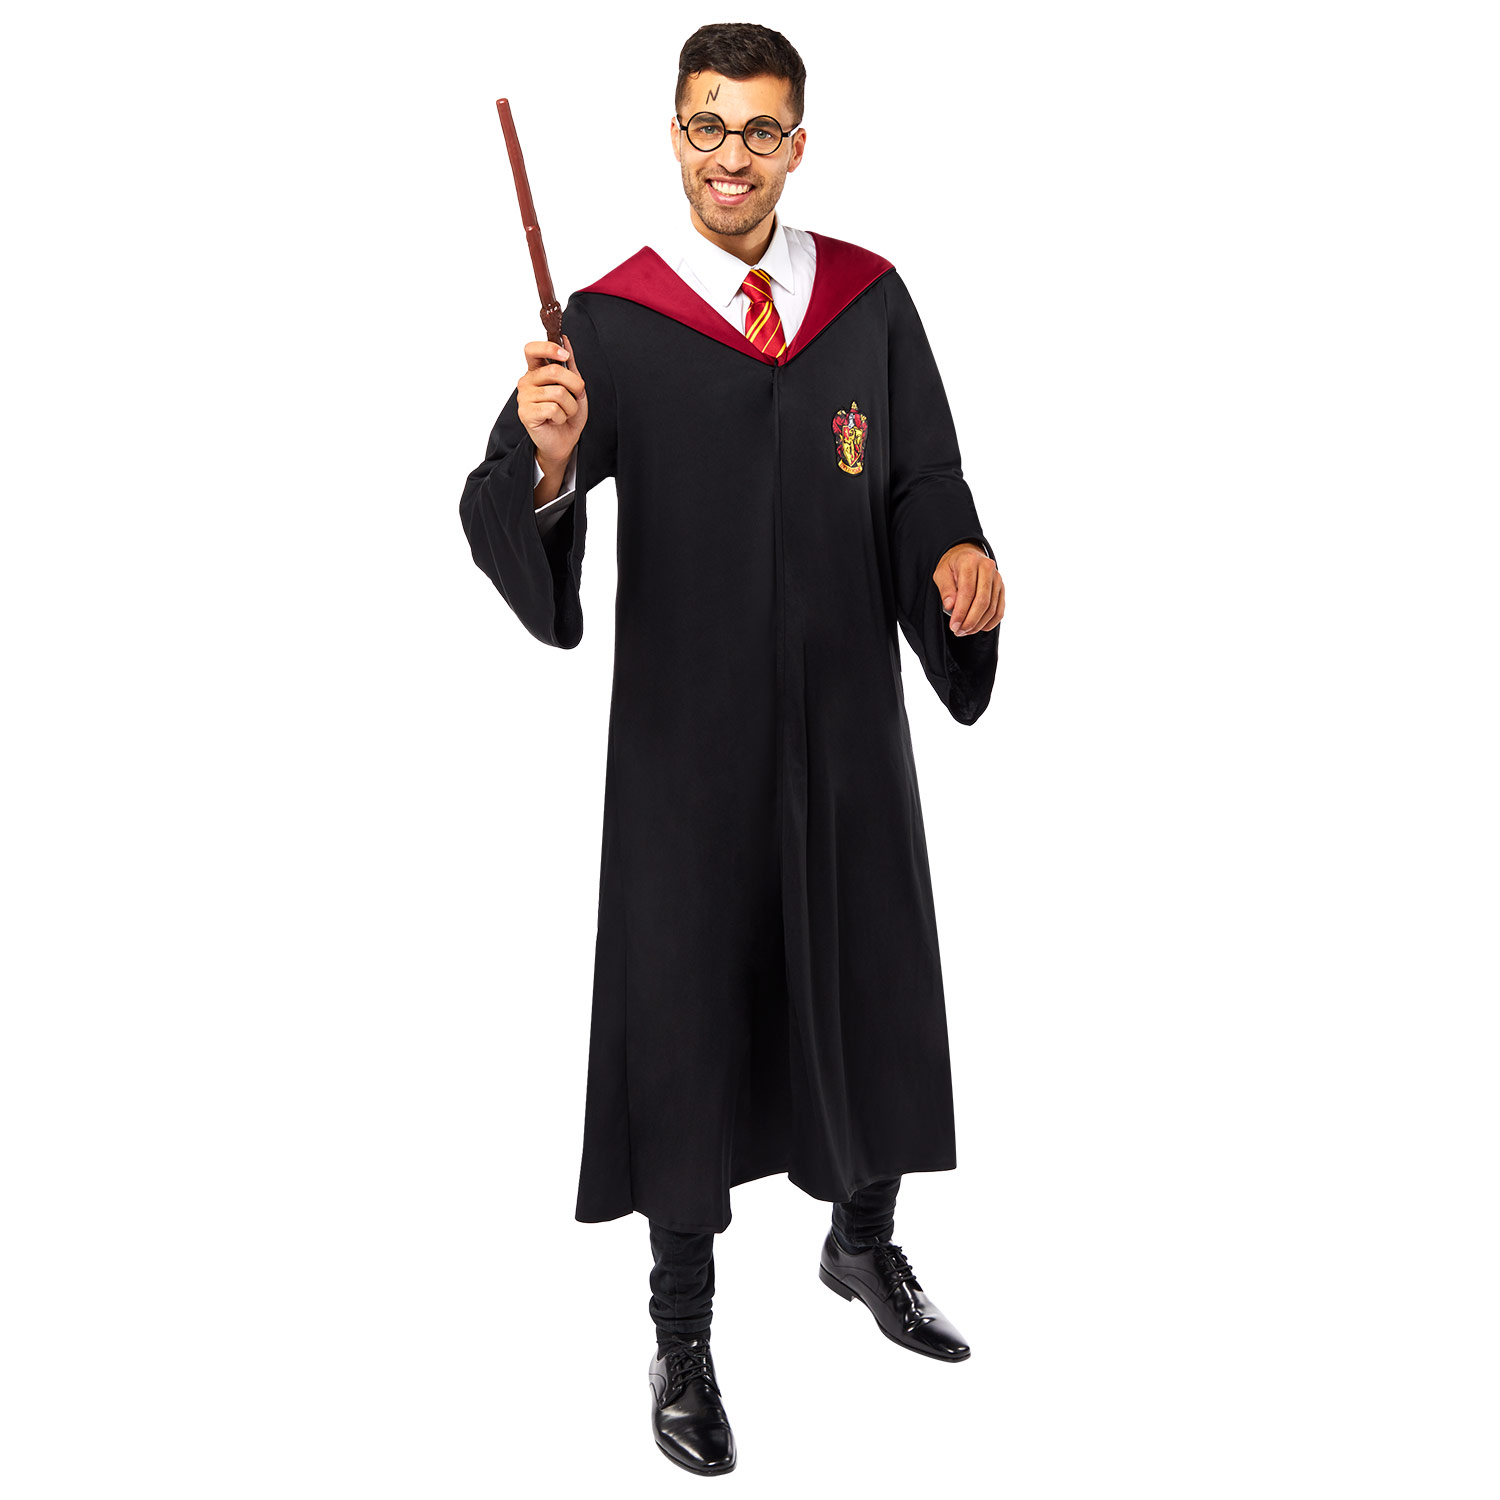 Gryffindor Costume - Standard Size - 1 PC : Amscan International